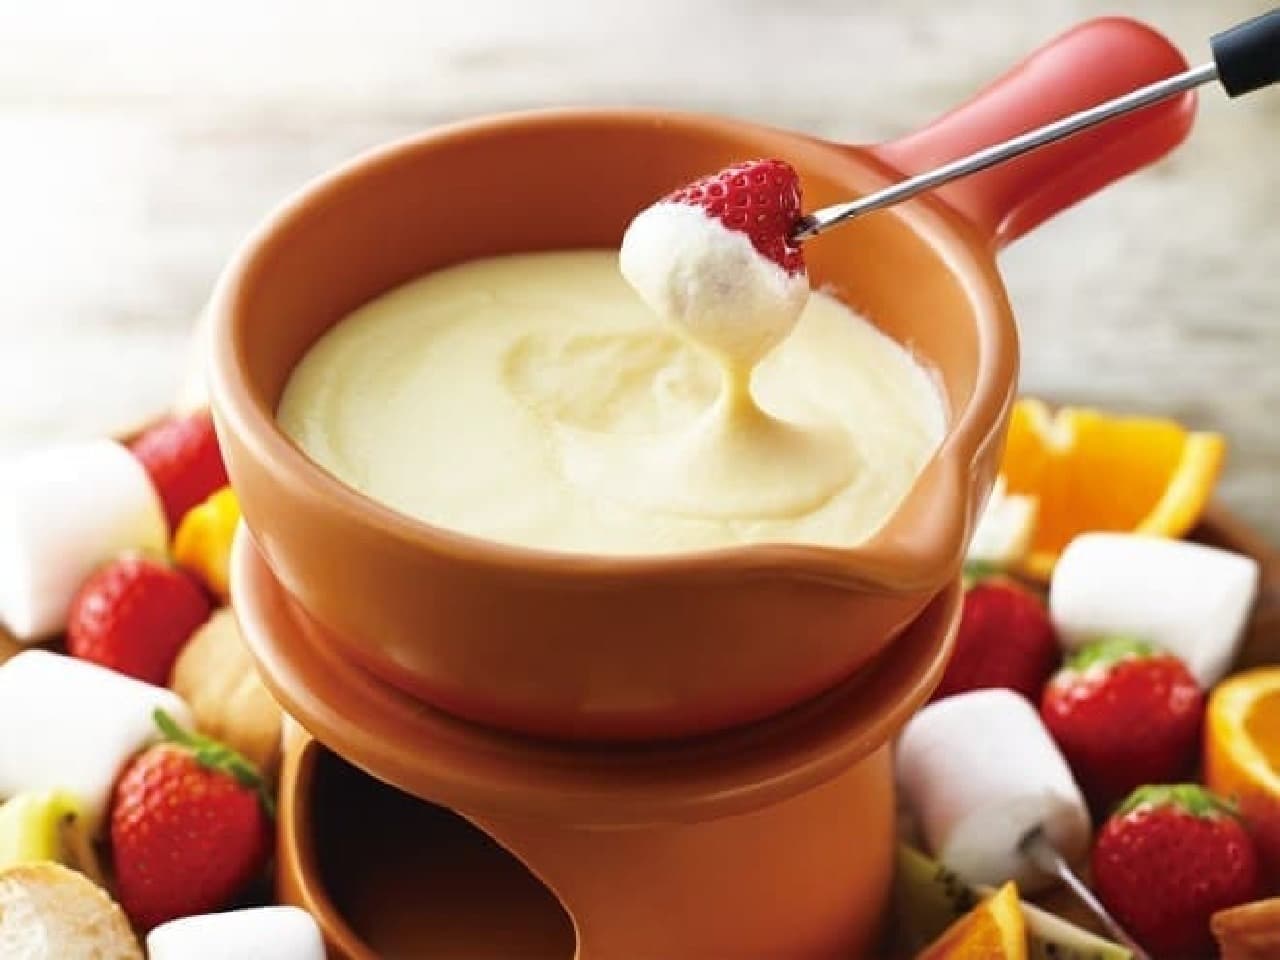 Sweet cheese fondue